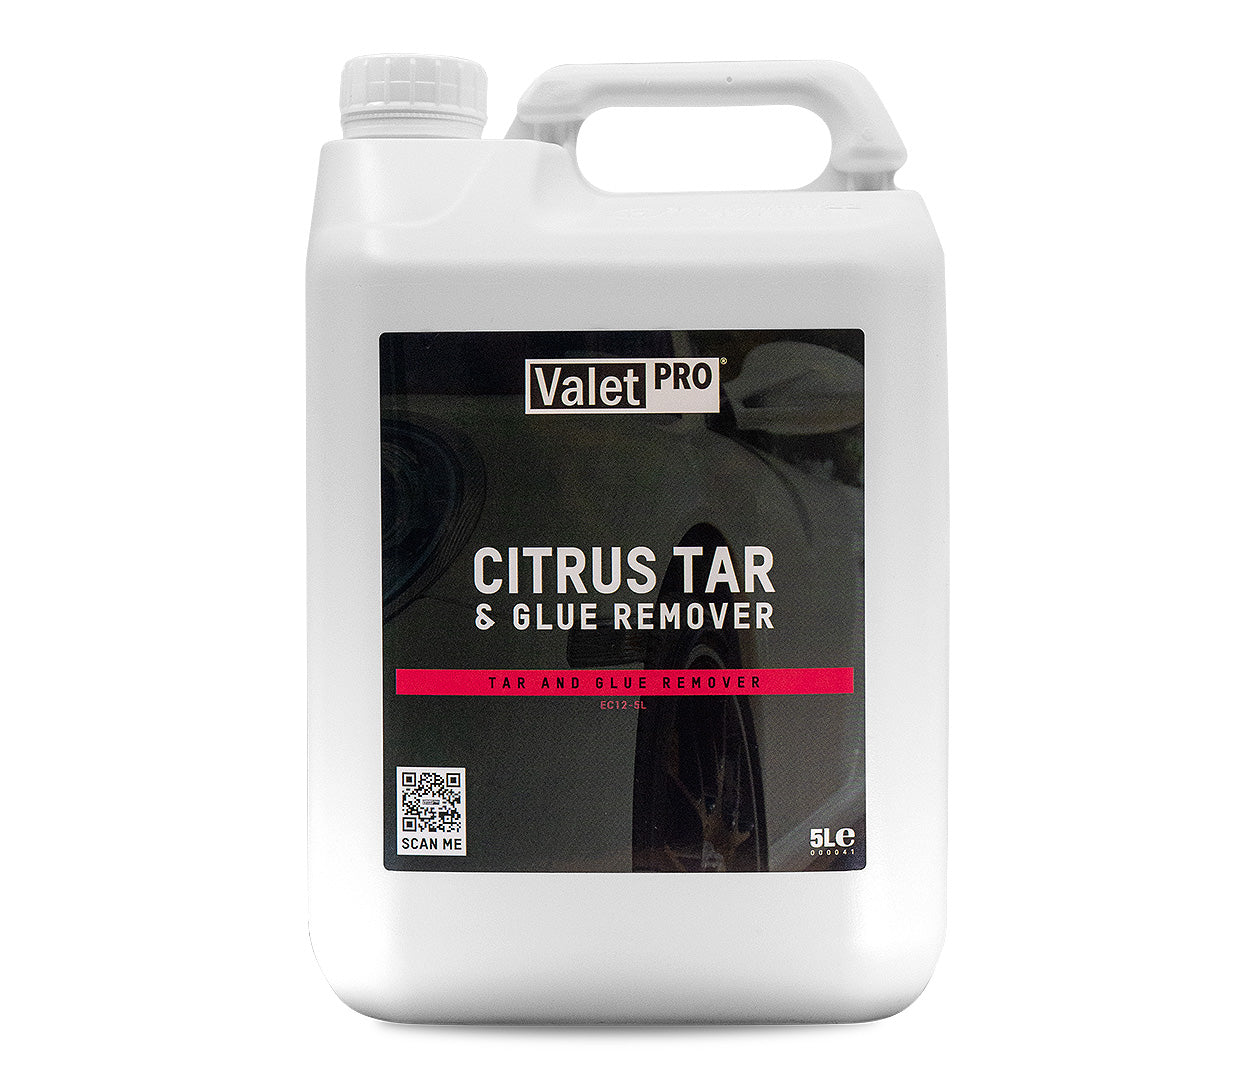 Valet Pro - Citrus Tar & Glue Remover